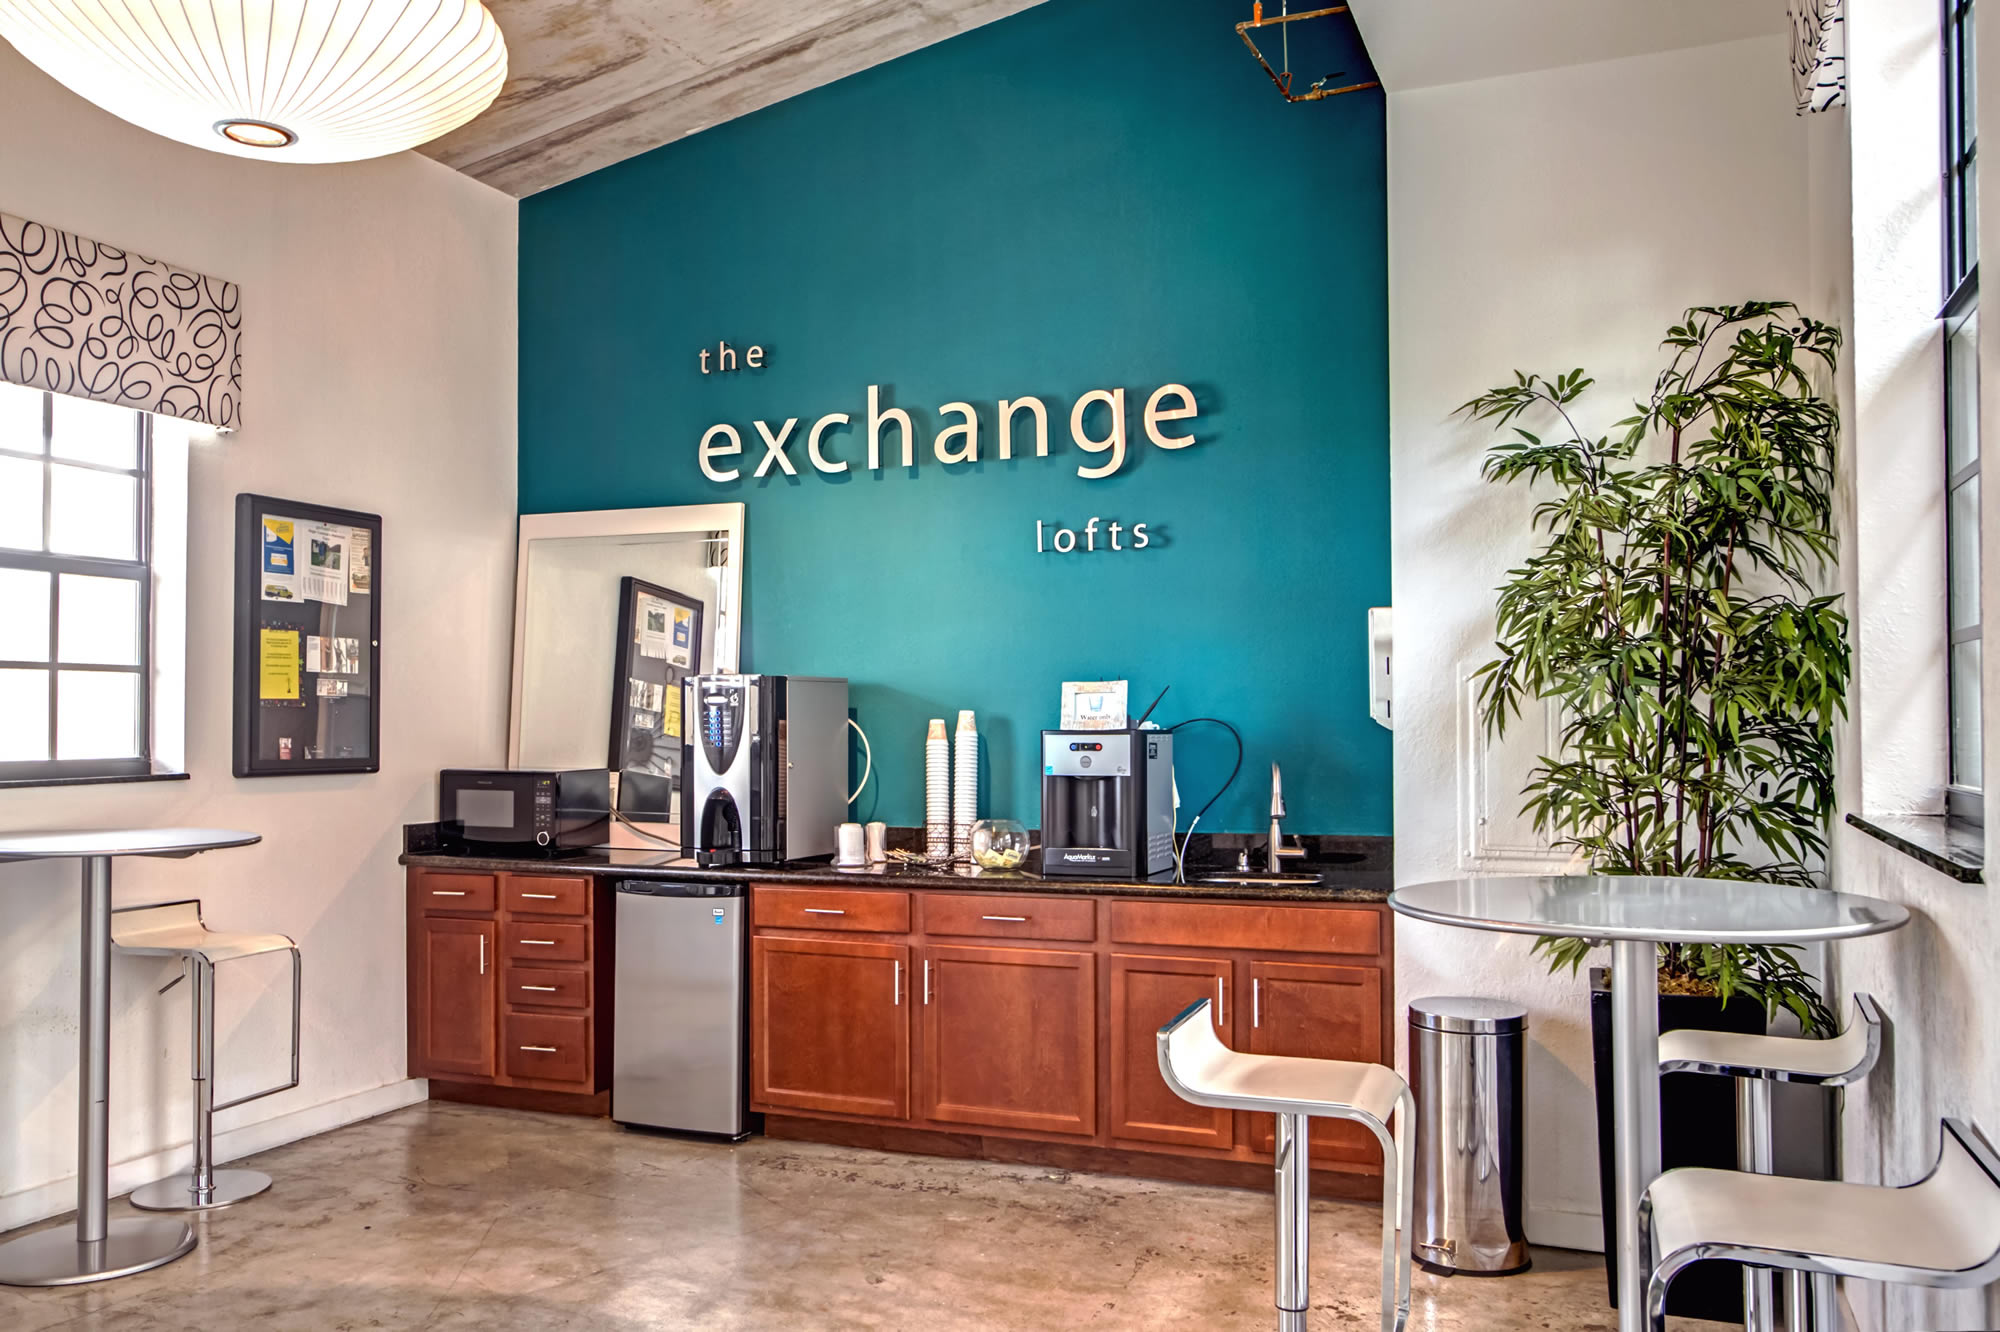 The Exchange Lofts